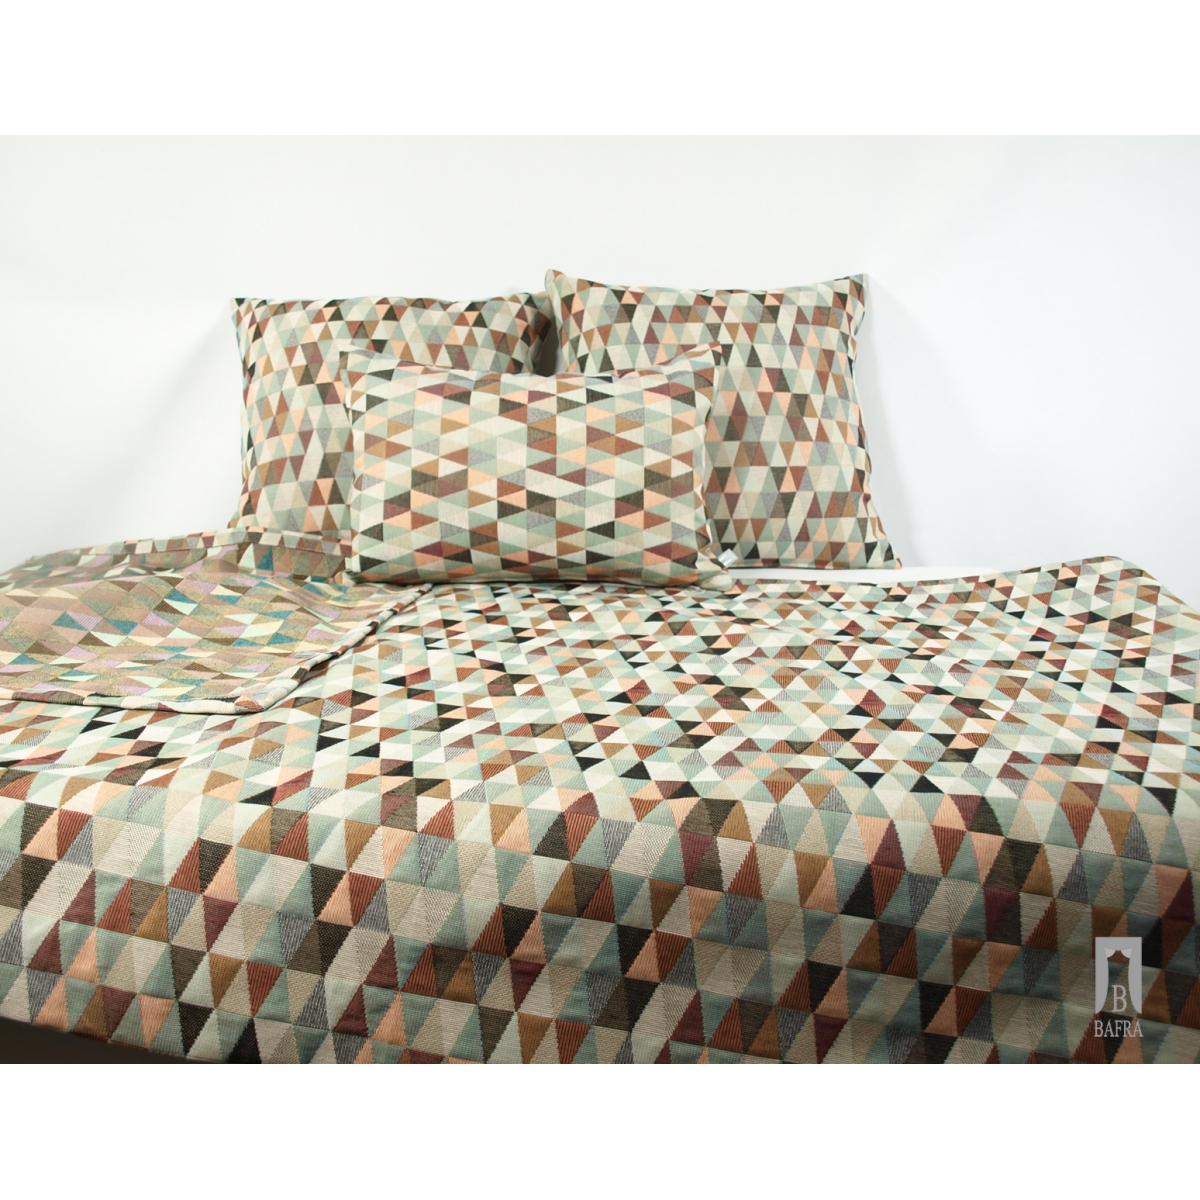 Bedspread with floral motif